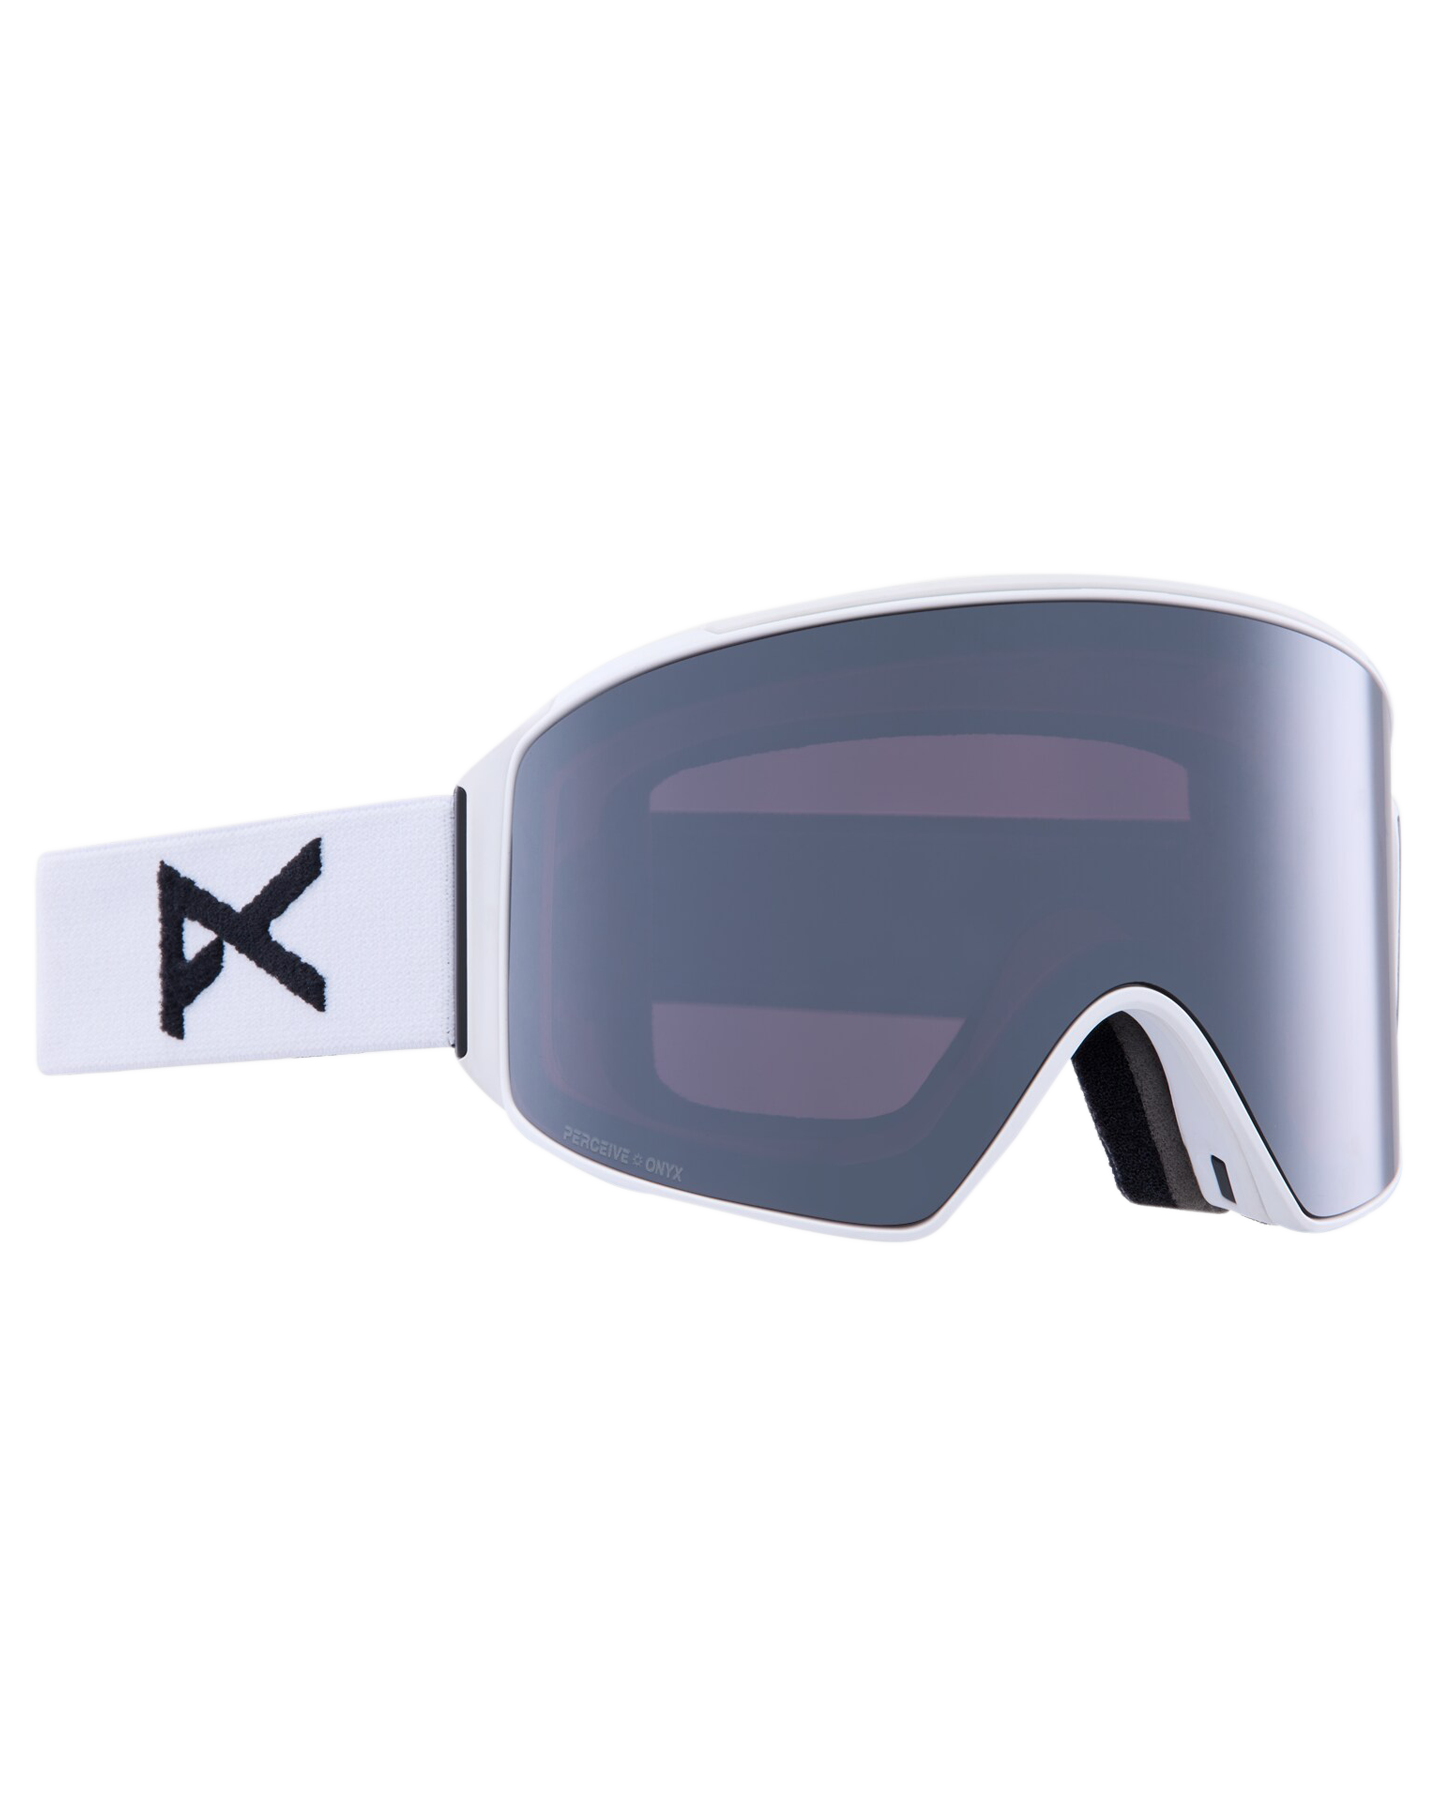 Anon M4 Cylindrical Low Bridge Snow Goggles + Bonus Lens + Mfi® Face Mask - Smoke/Perceive Sunny Onyx Lens Snow Goggles - Mens - Trojan Wake Ski Snow